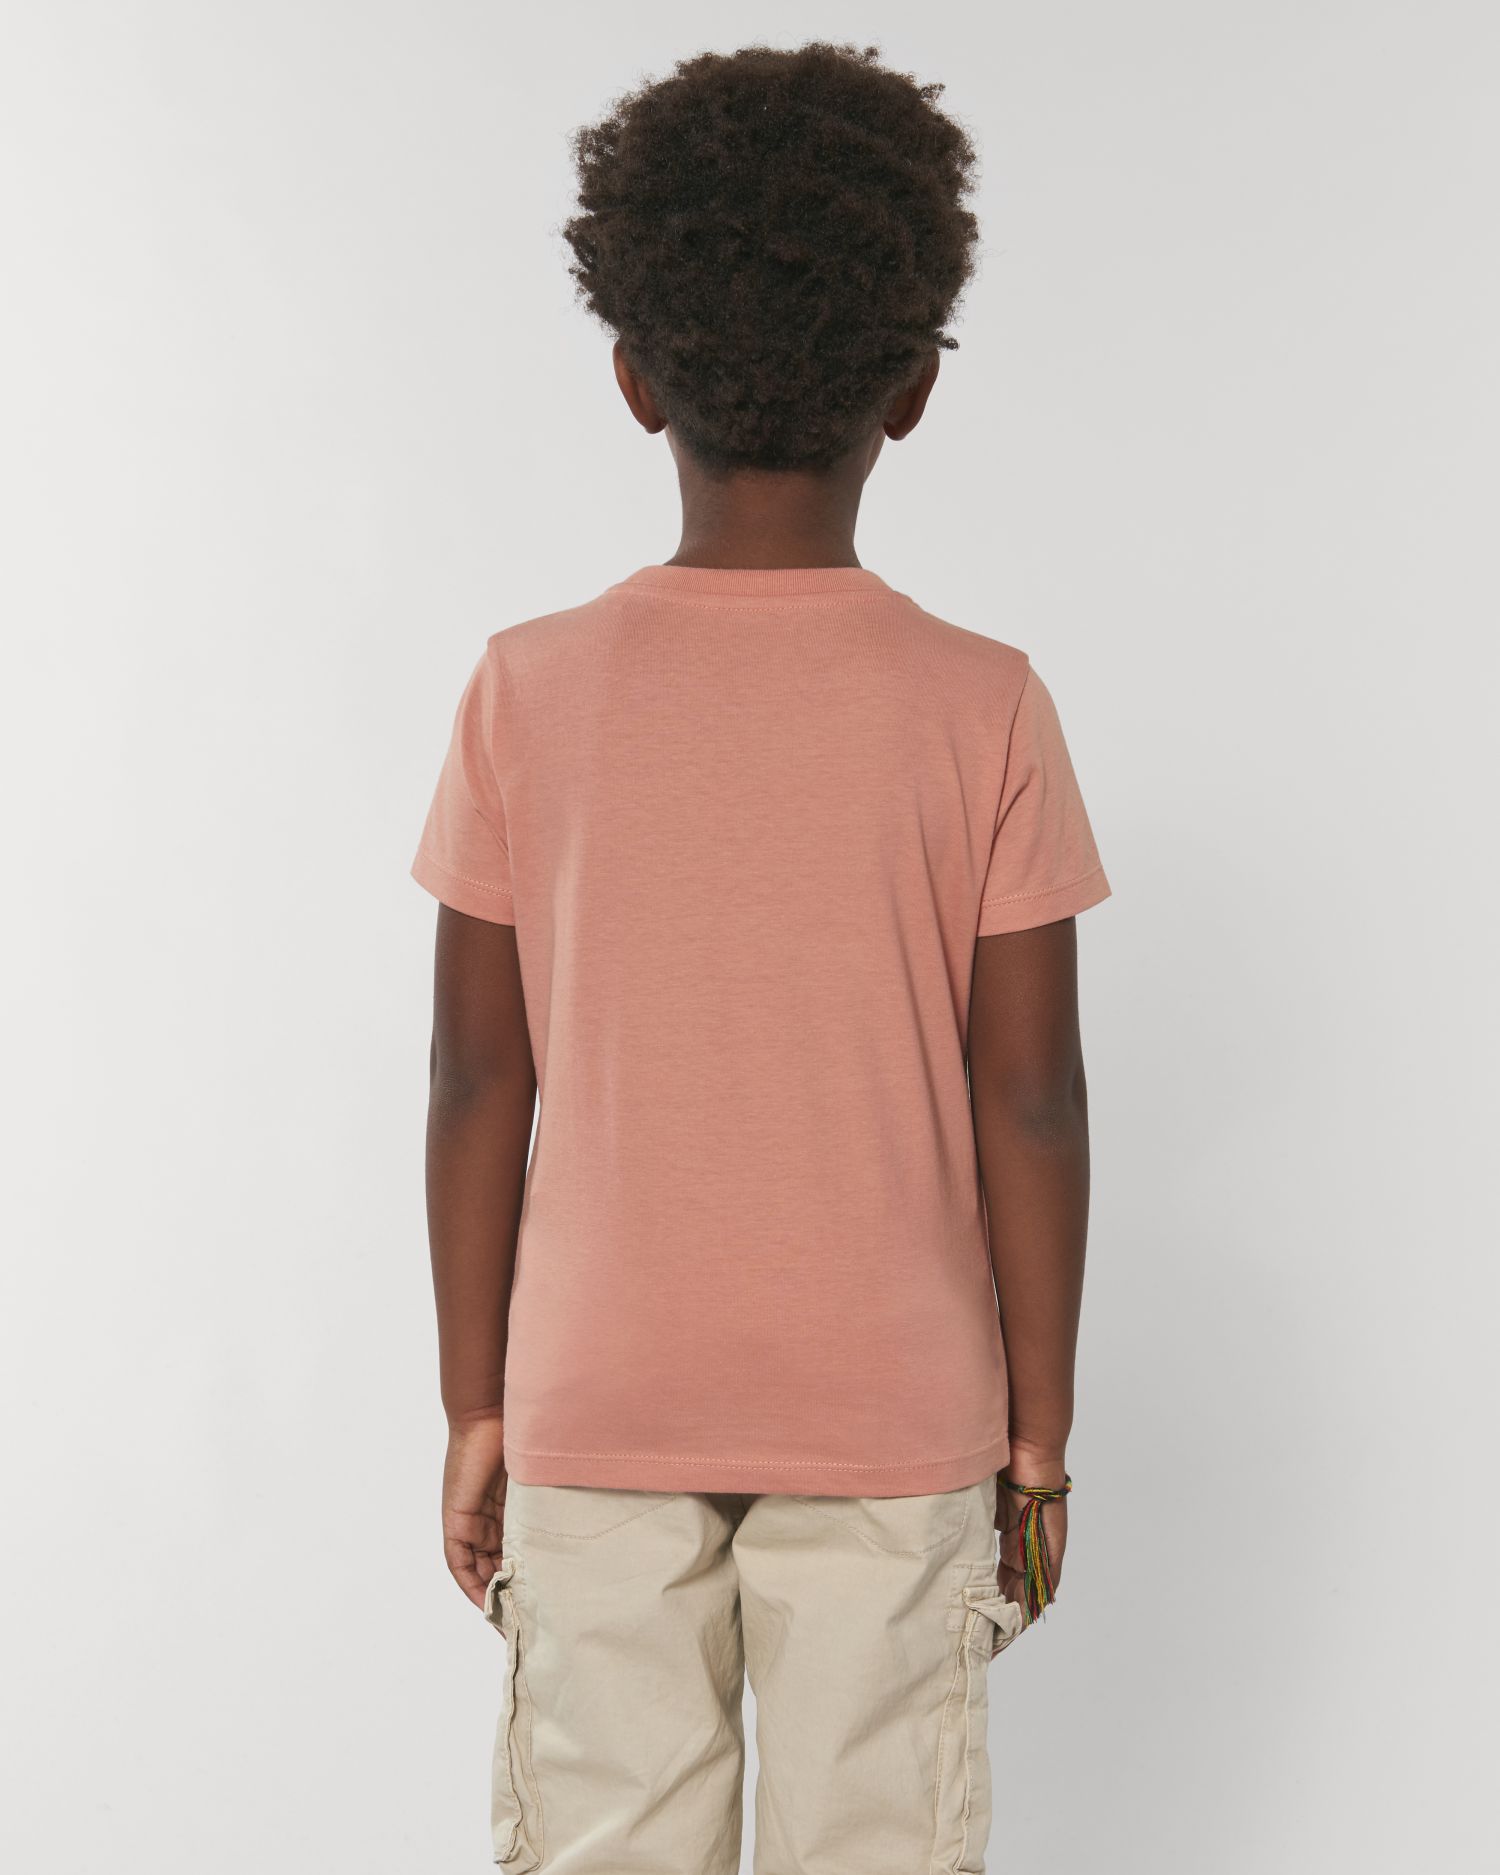 Kids T-Shirt Mini Creator in Farbe Rose Clay